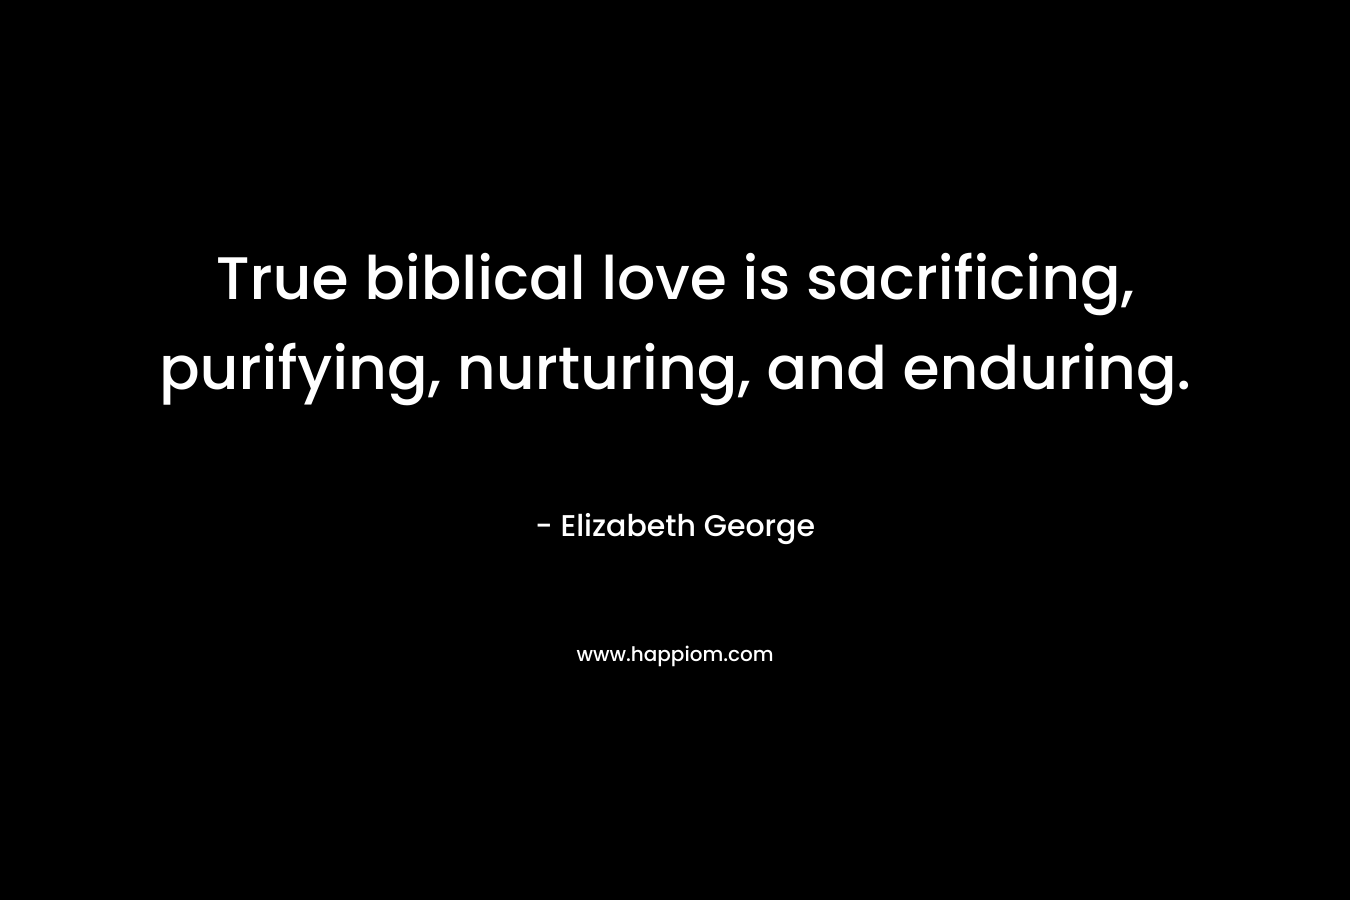 True biblical love is sacrificing, purifying, nurturing, and enduring.